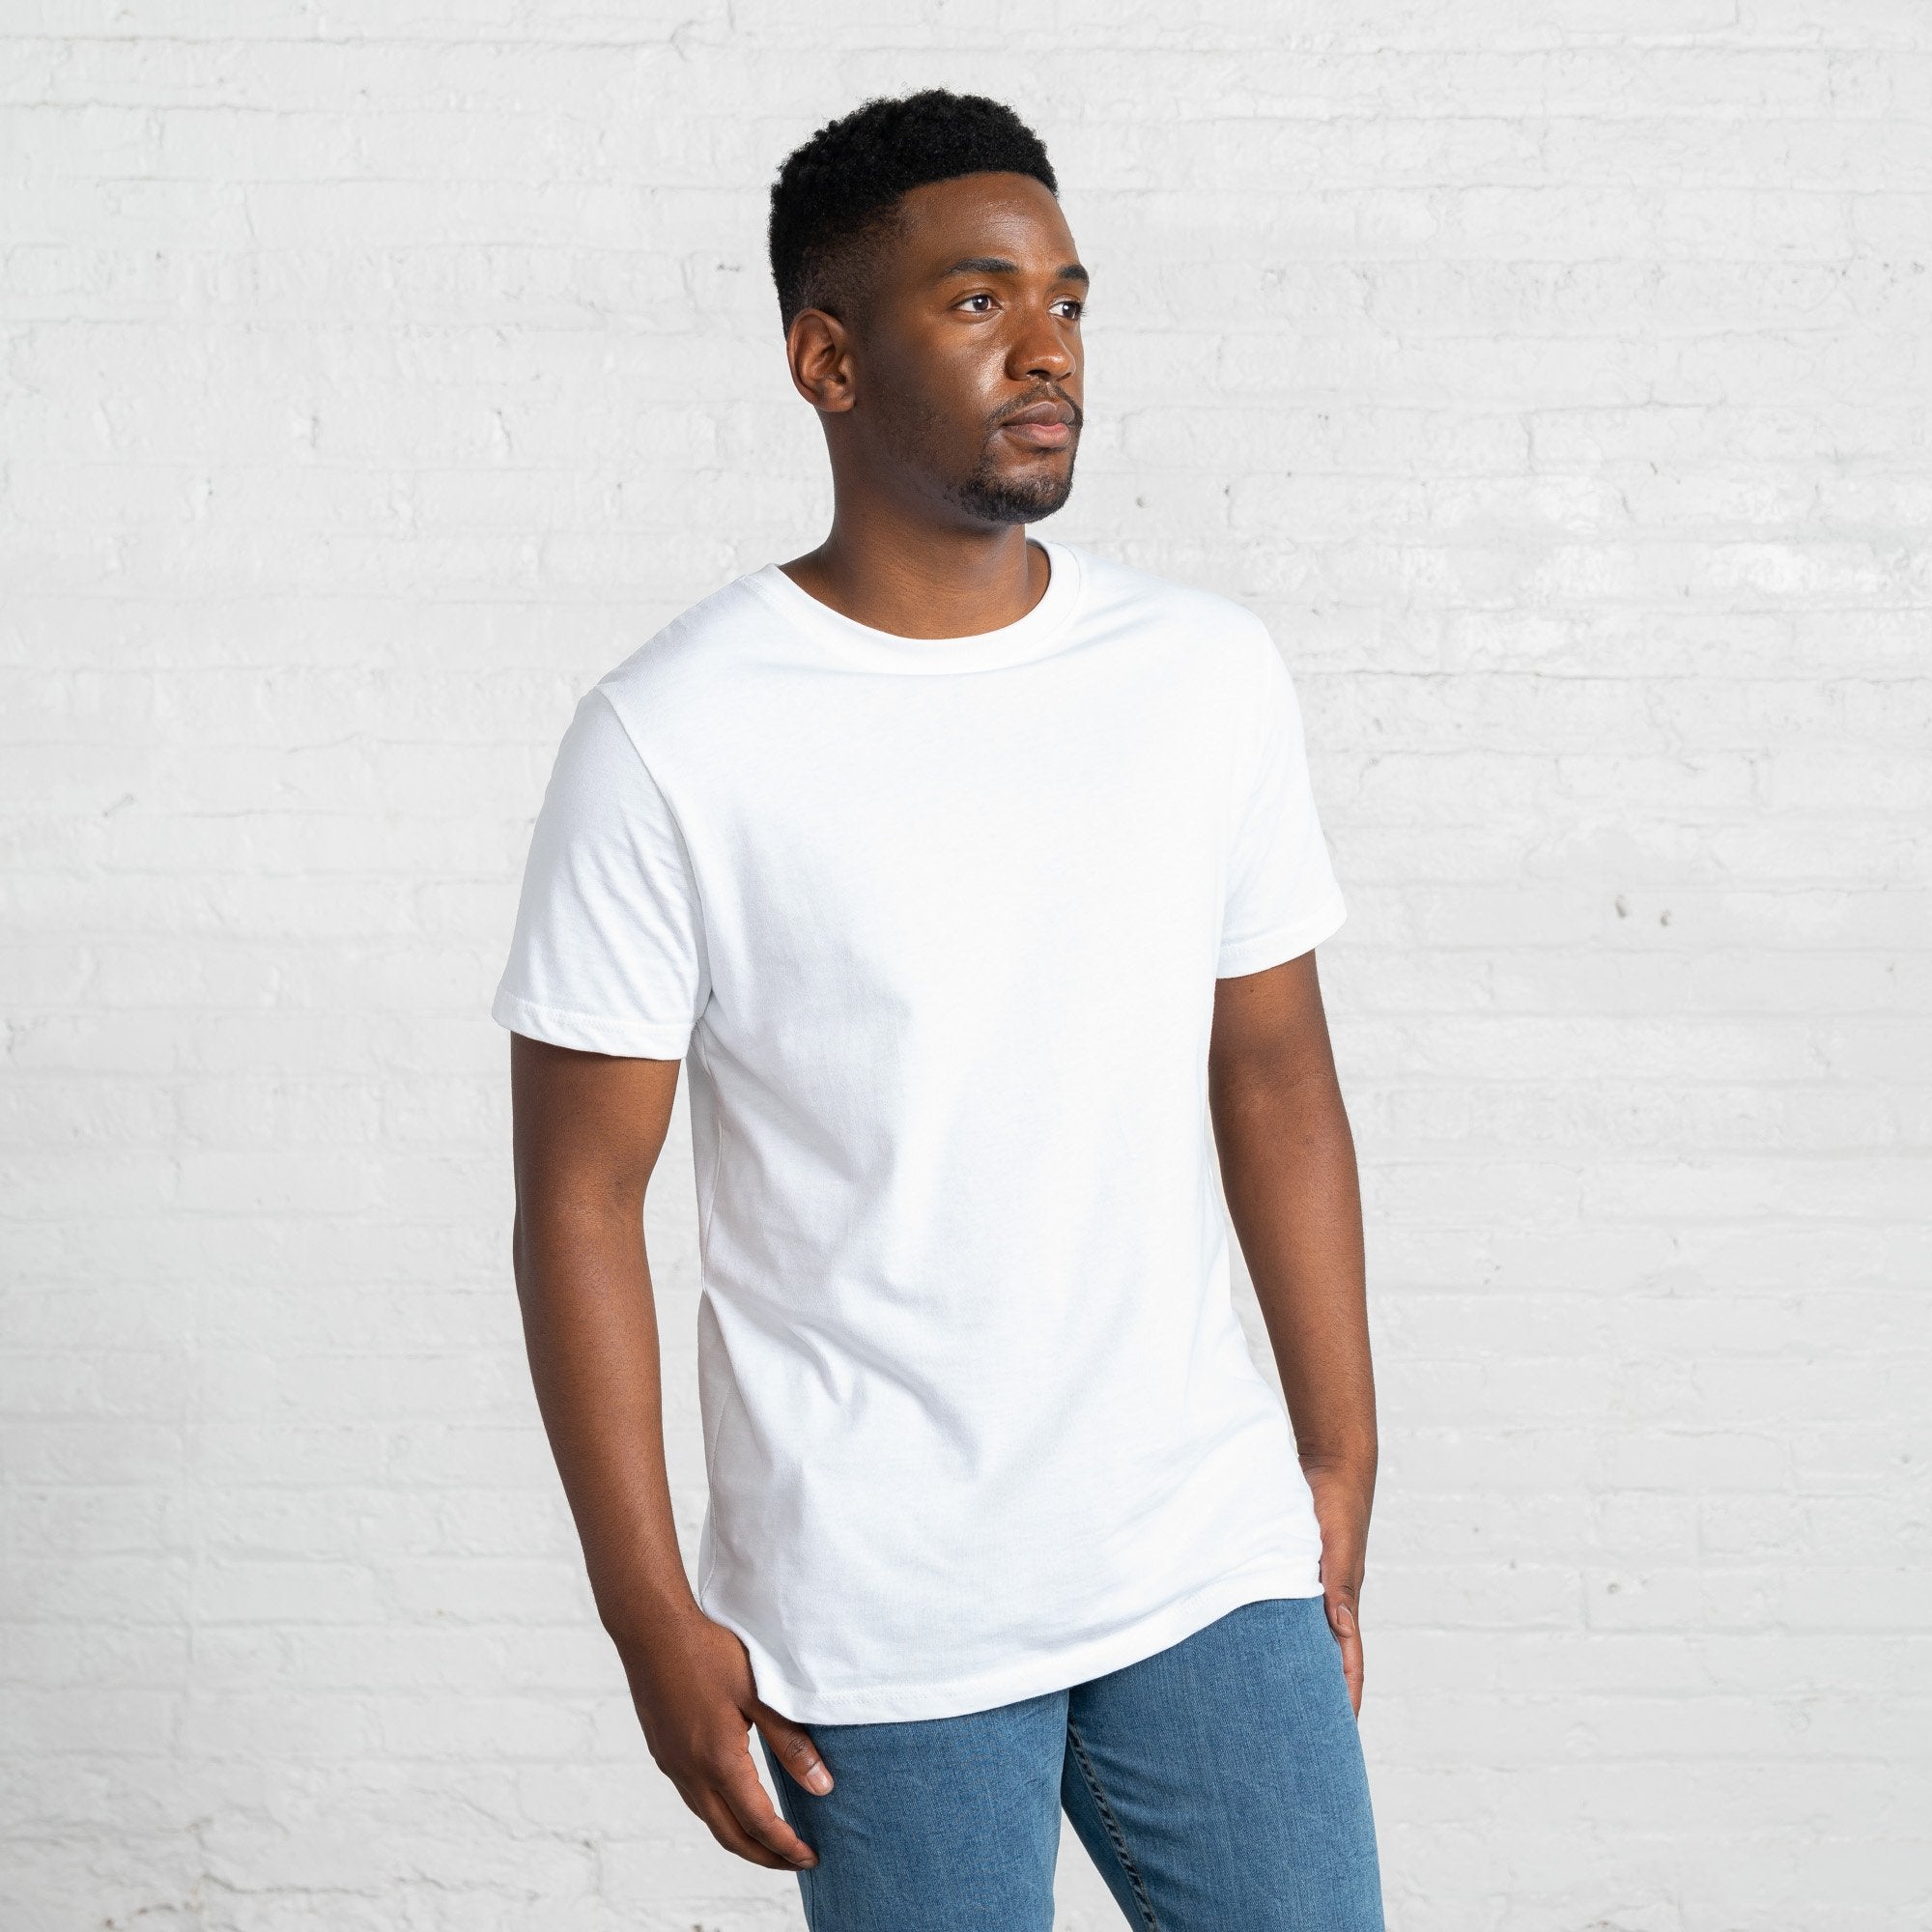 Color:White Classic combed cotton men's t-shirts